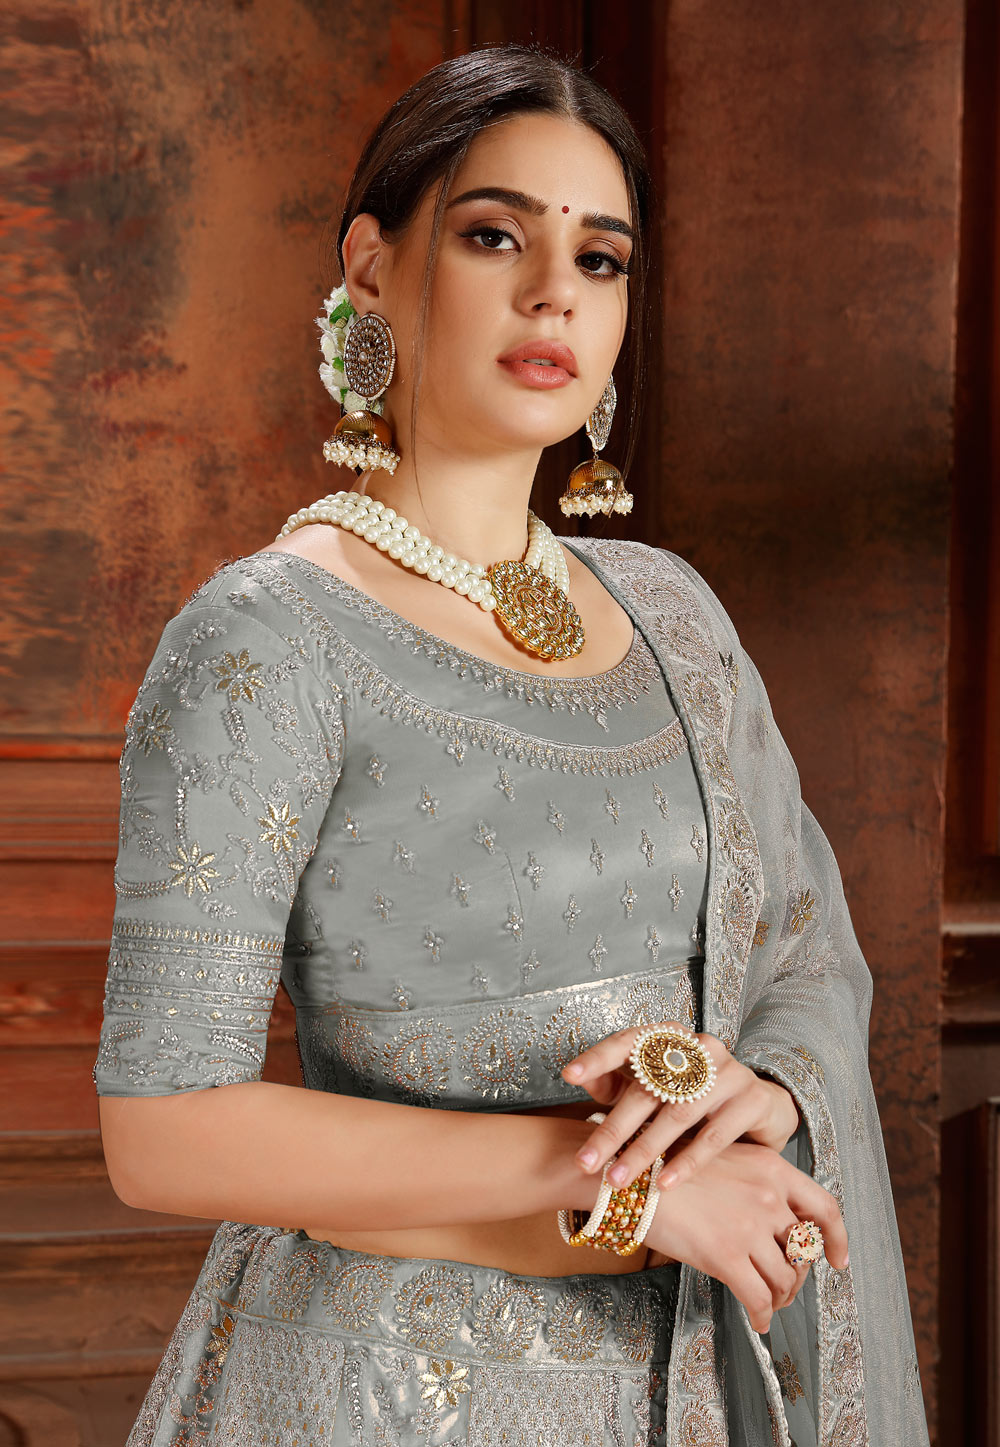 Arpita Mehta and Kunal Rawal's wedding outfits: A closer look | Vogue India